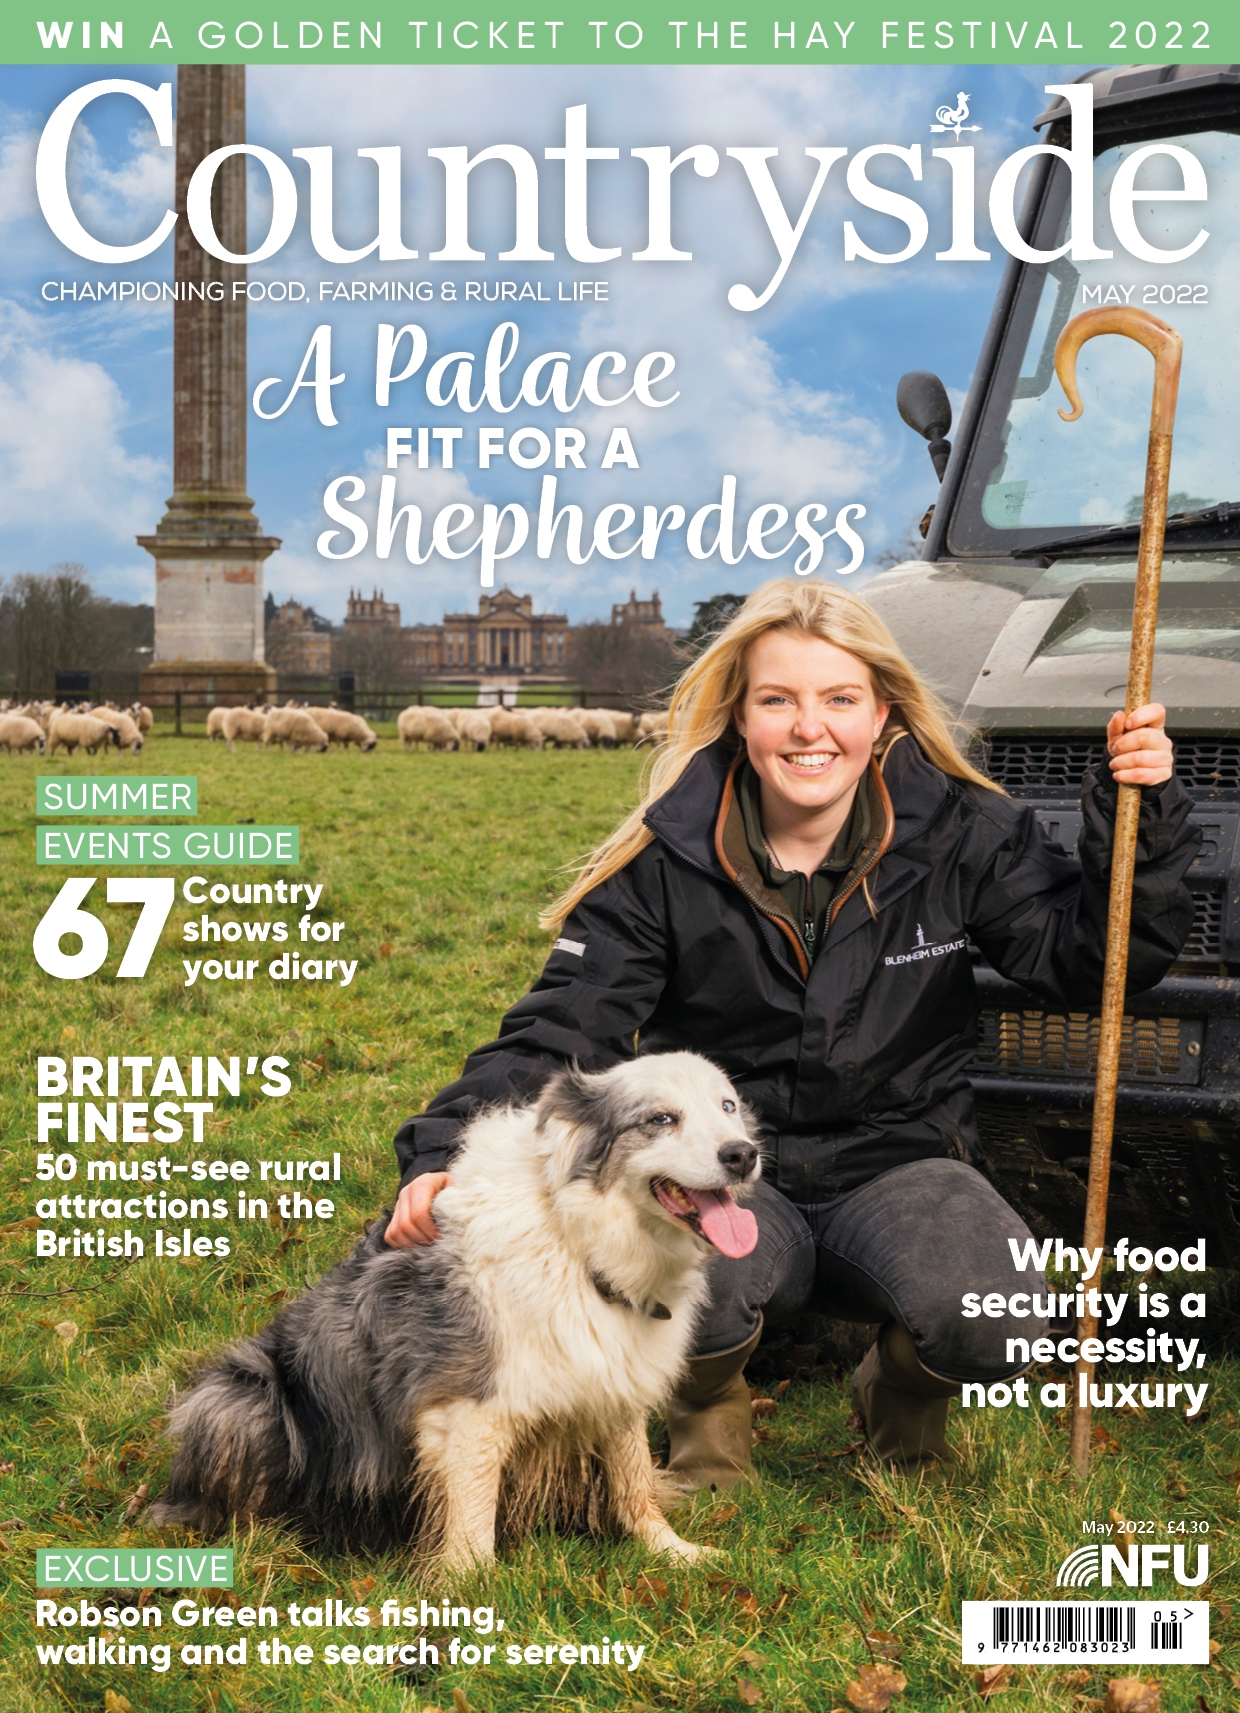 Countryside magazine